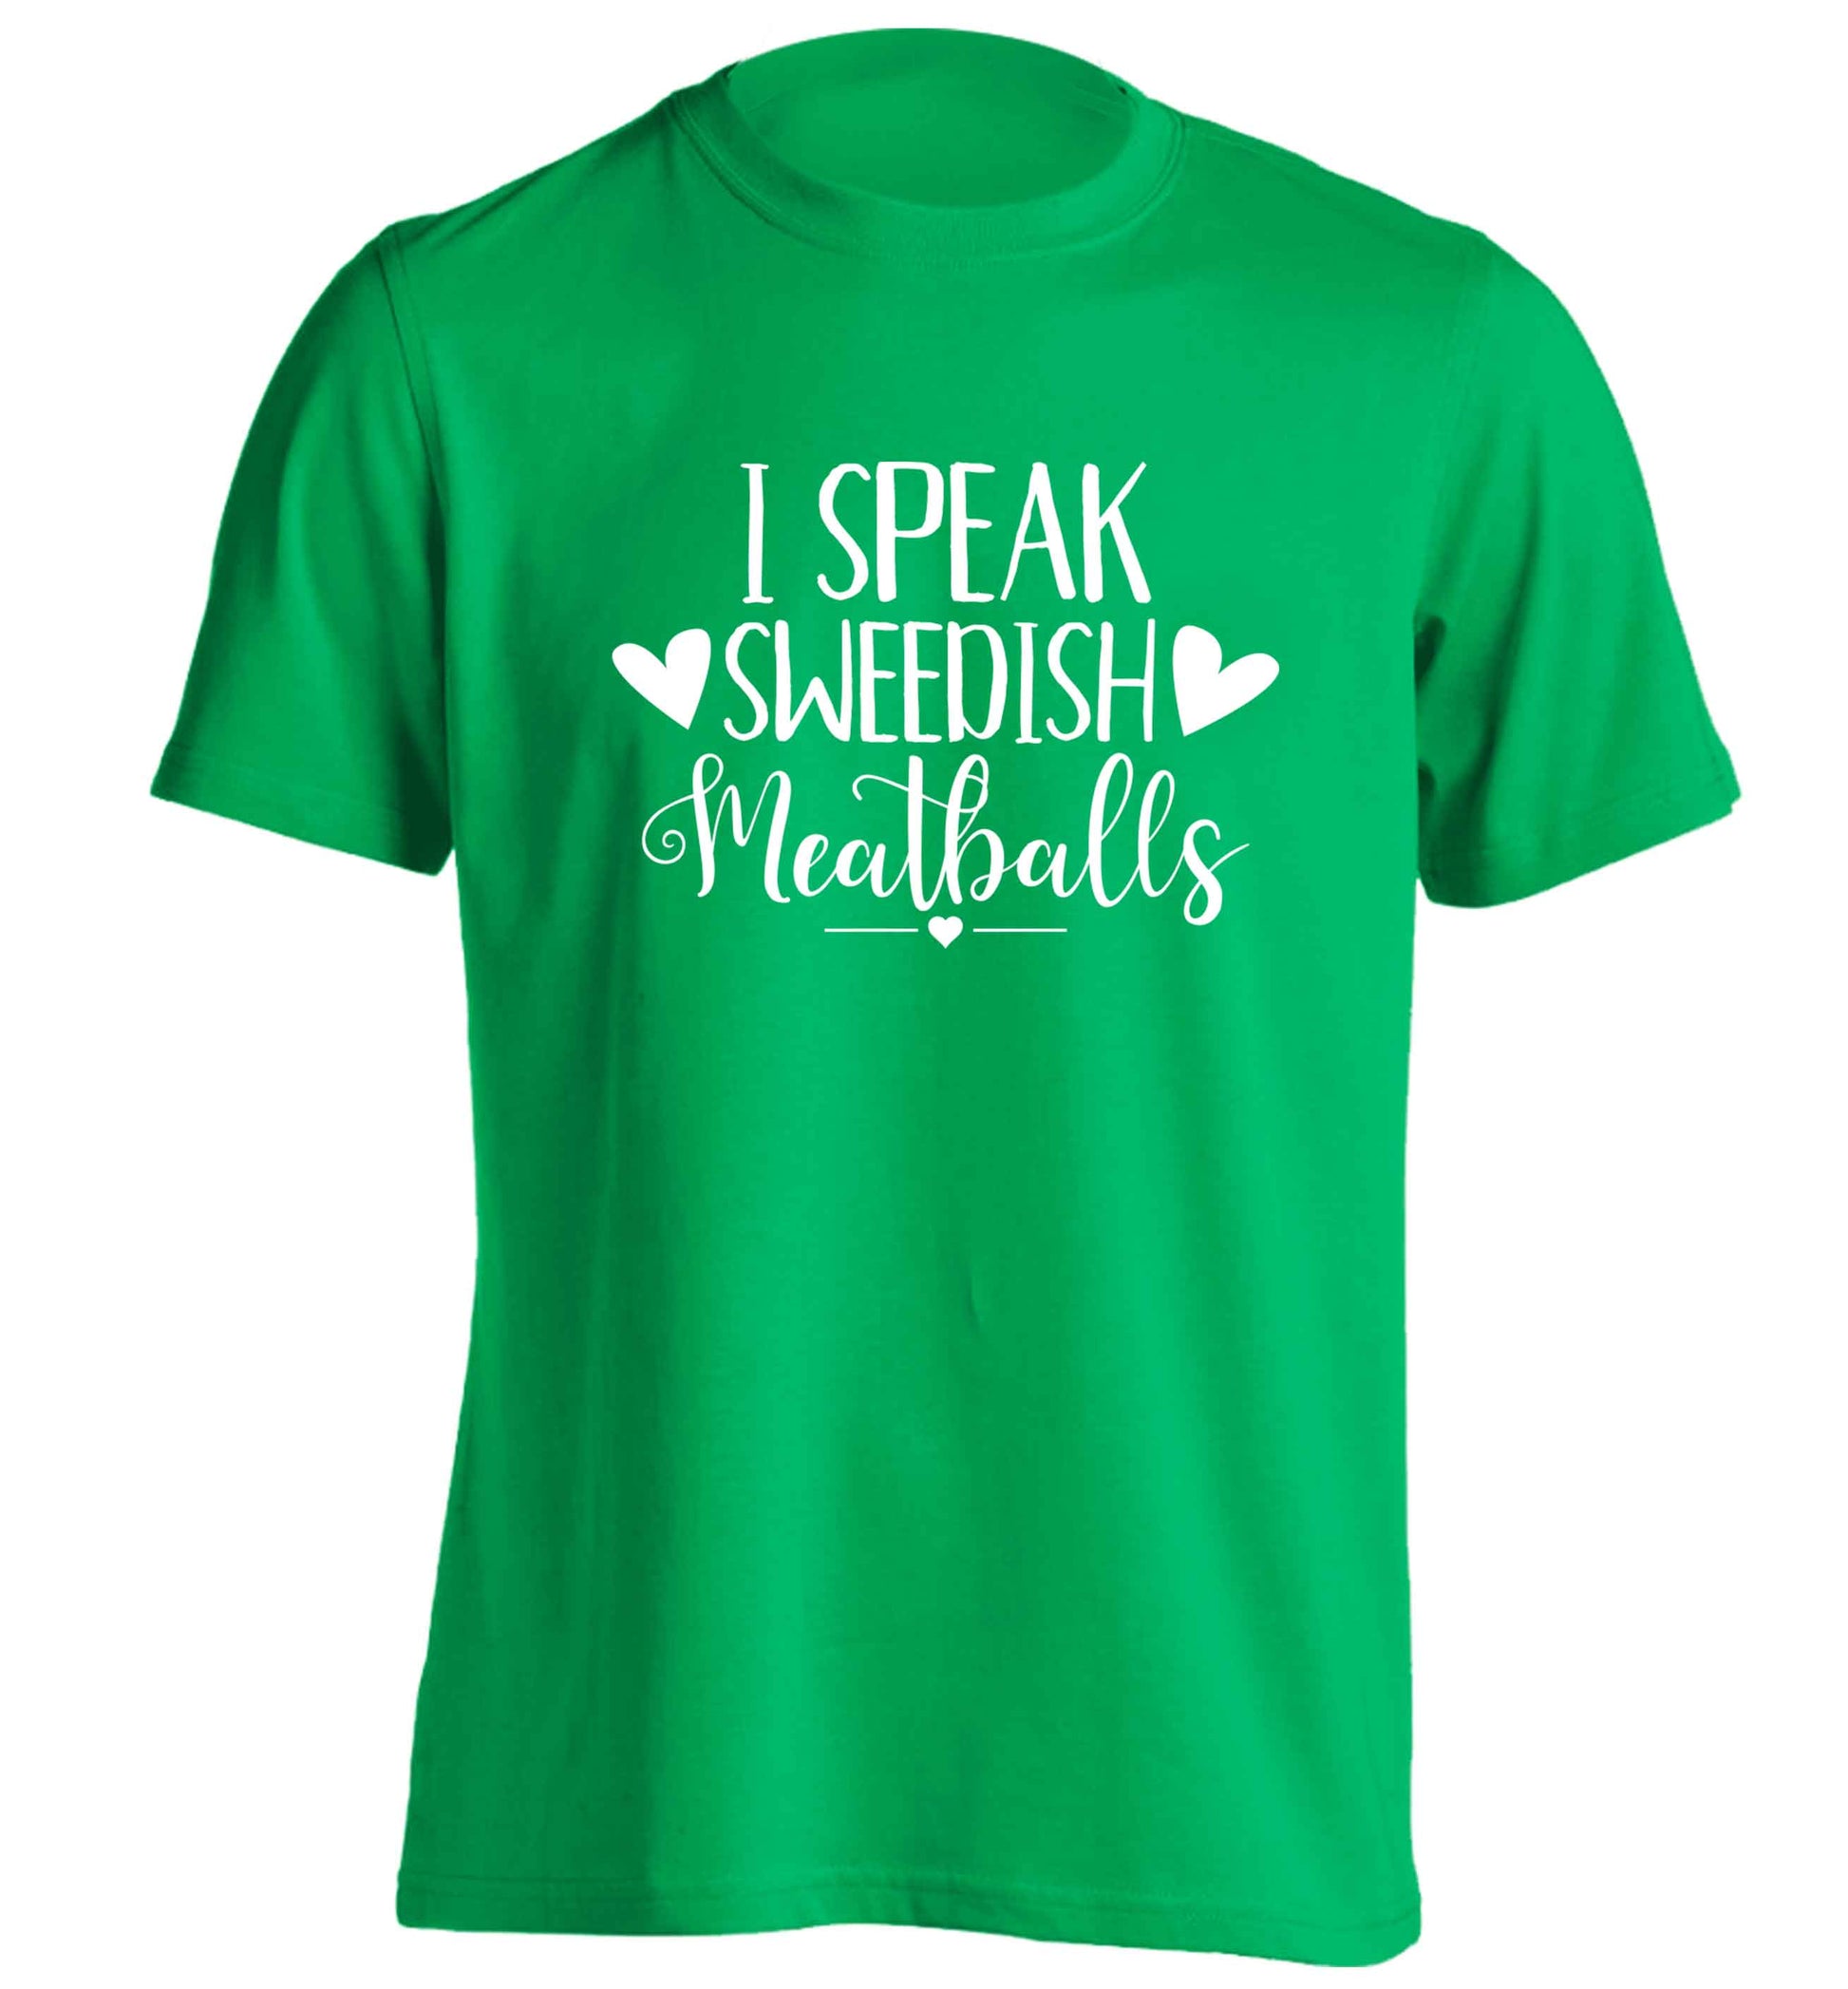 I speak sweedish...meatballs adults unisex green Tshirt 2XL